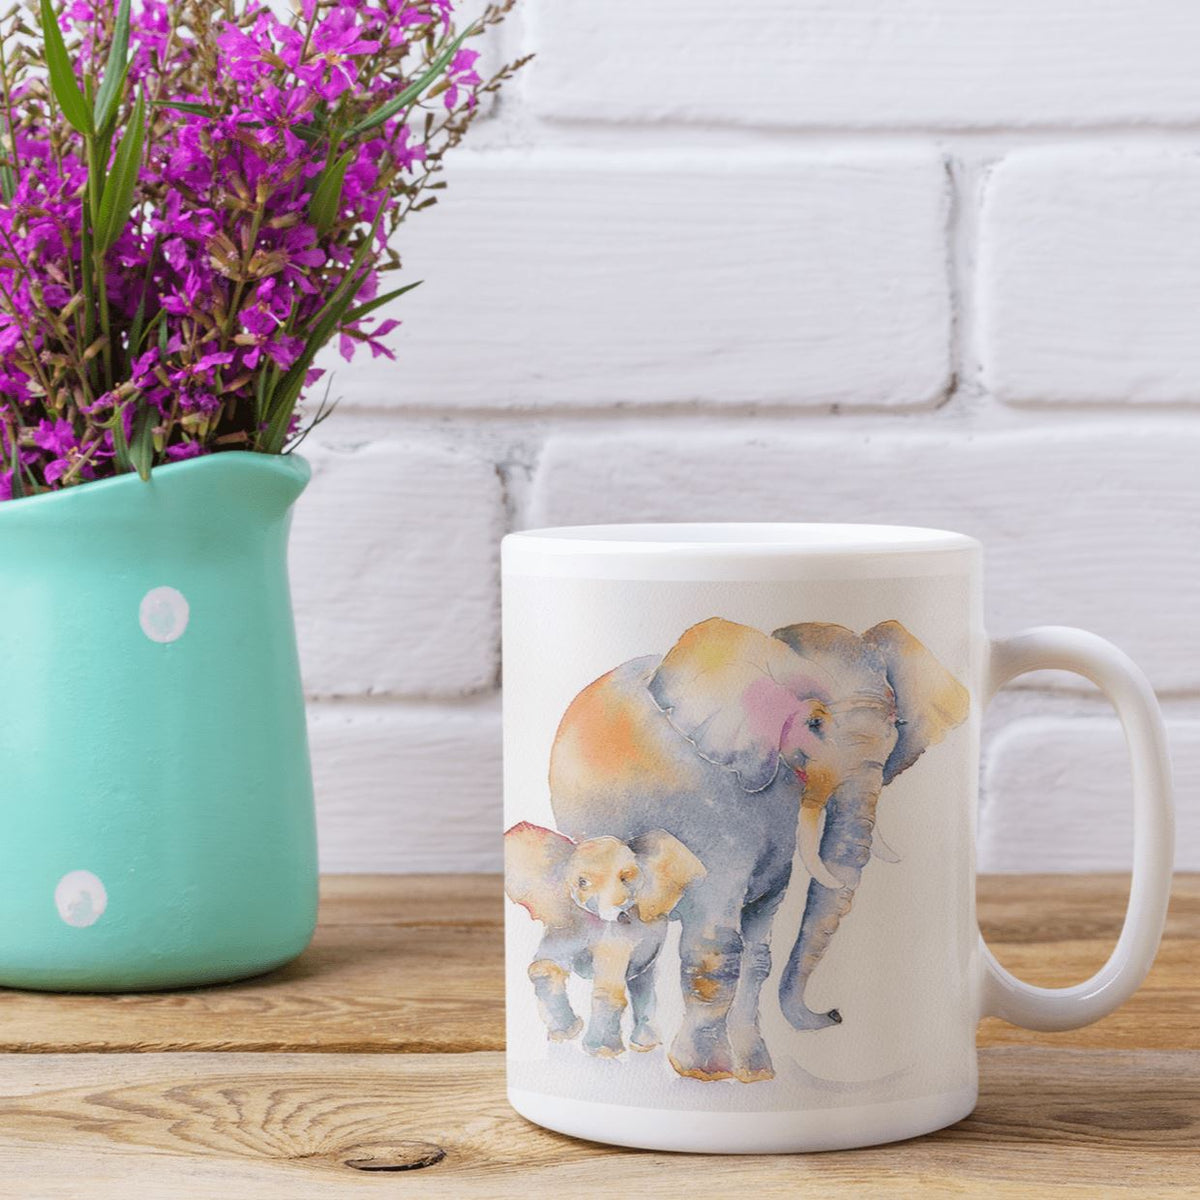 Elephant Mandala Mug, Elephant Coffee Mug, Elephant Yoga Mug